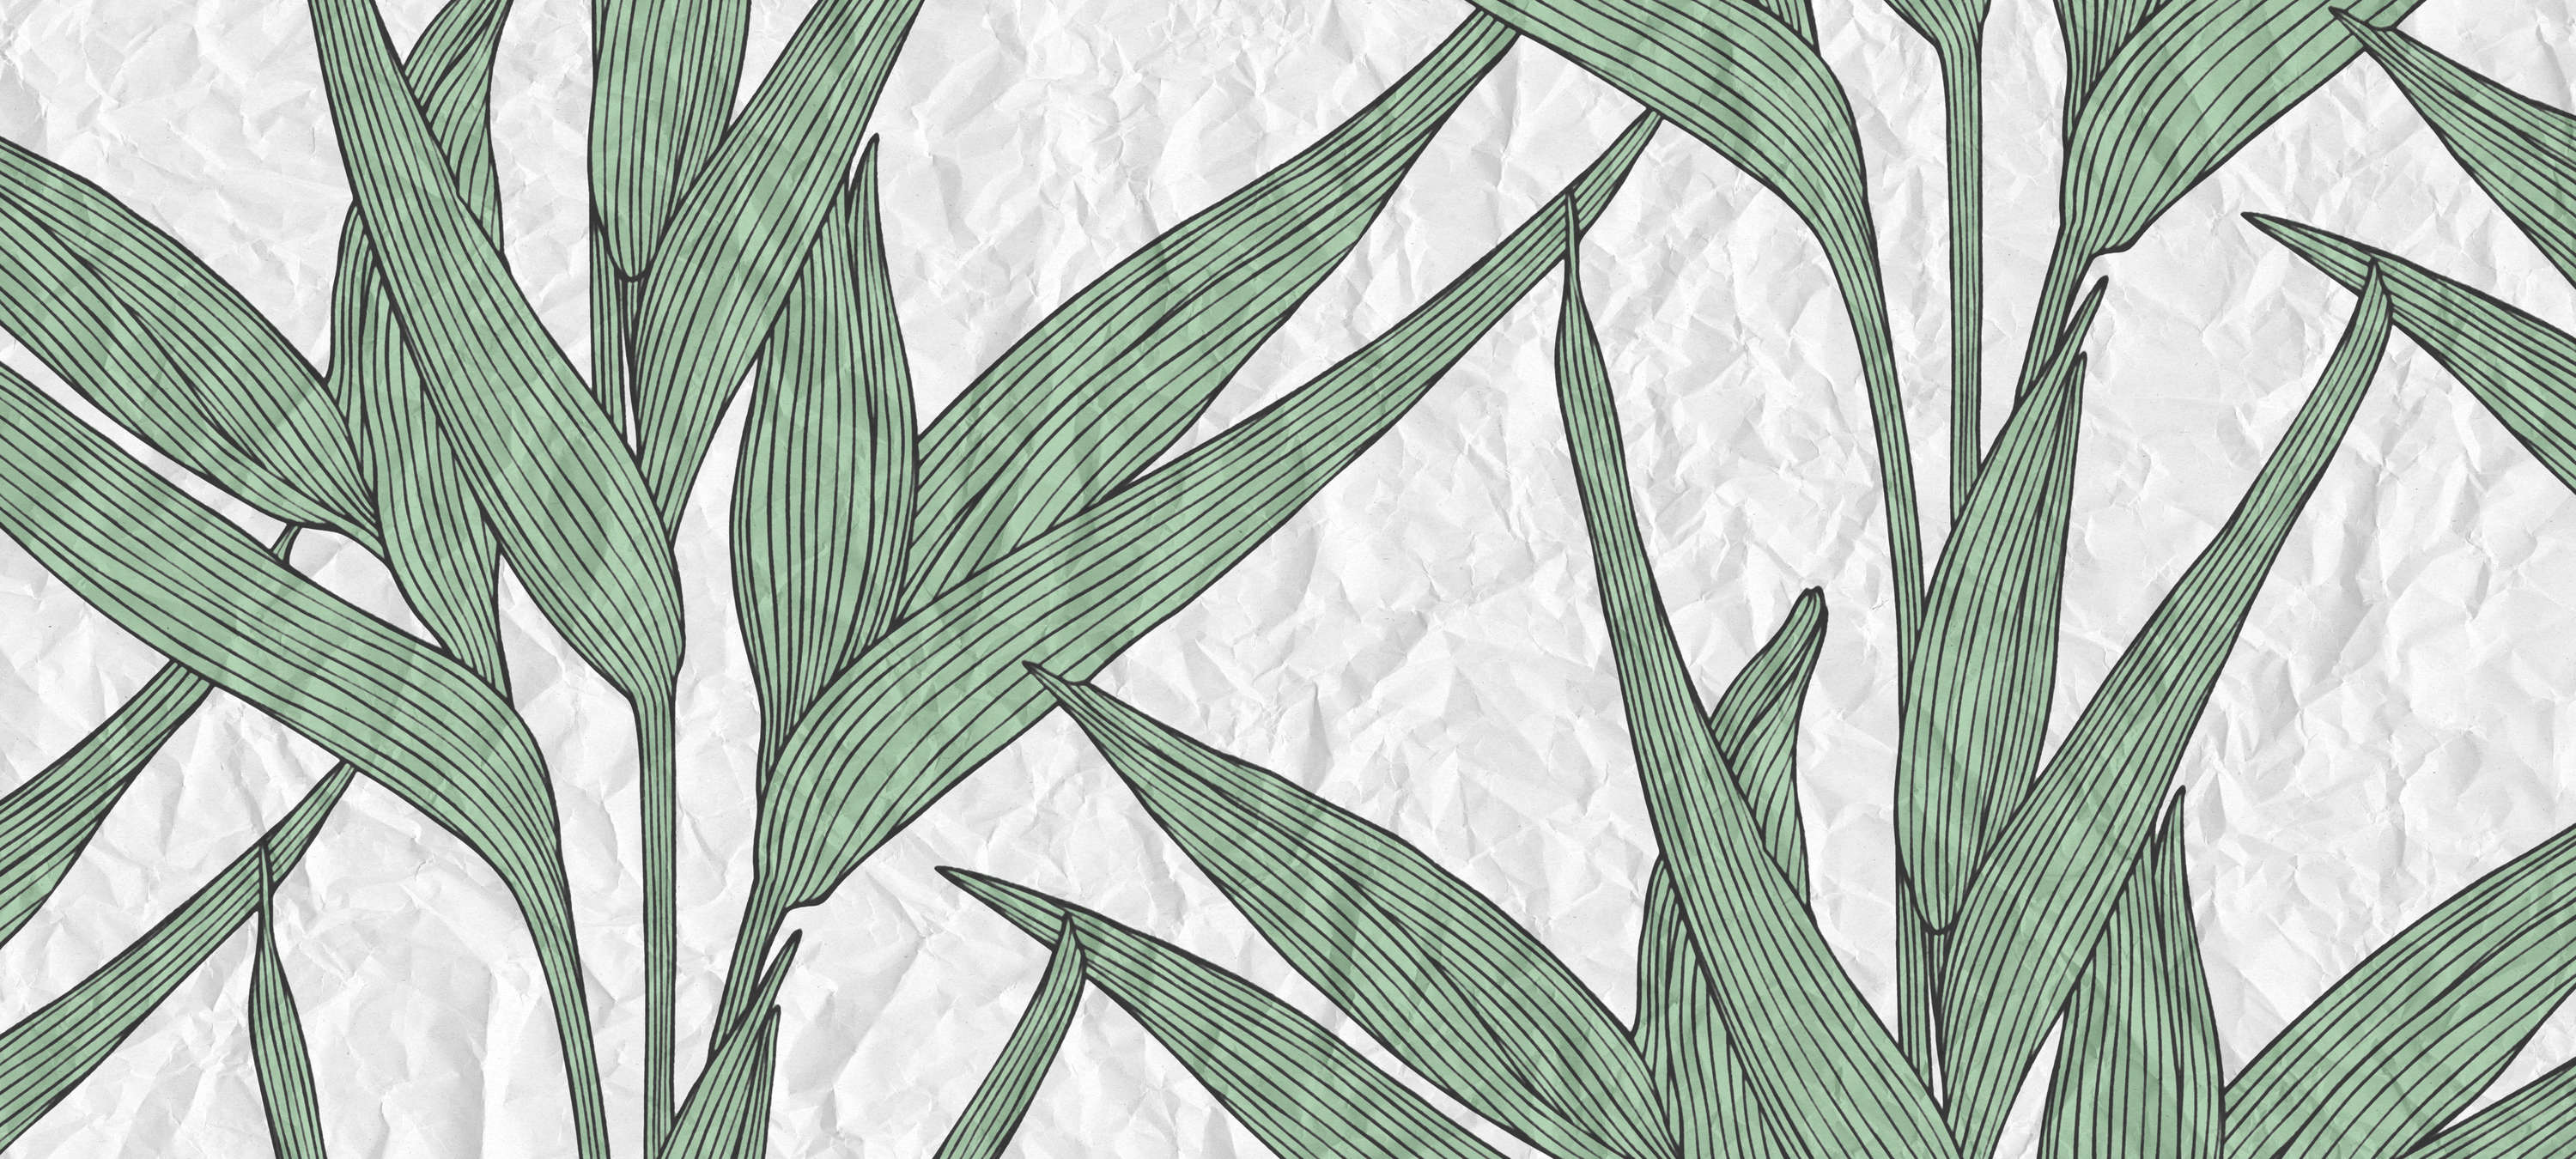             Fototapete Blättern Muster & Papier-Optik – Grün, Weiß
        